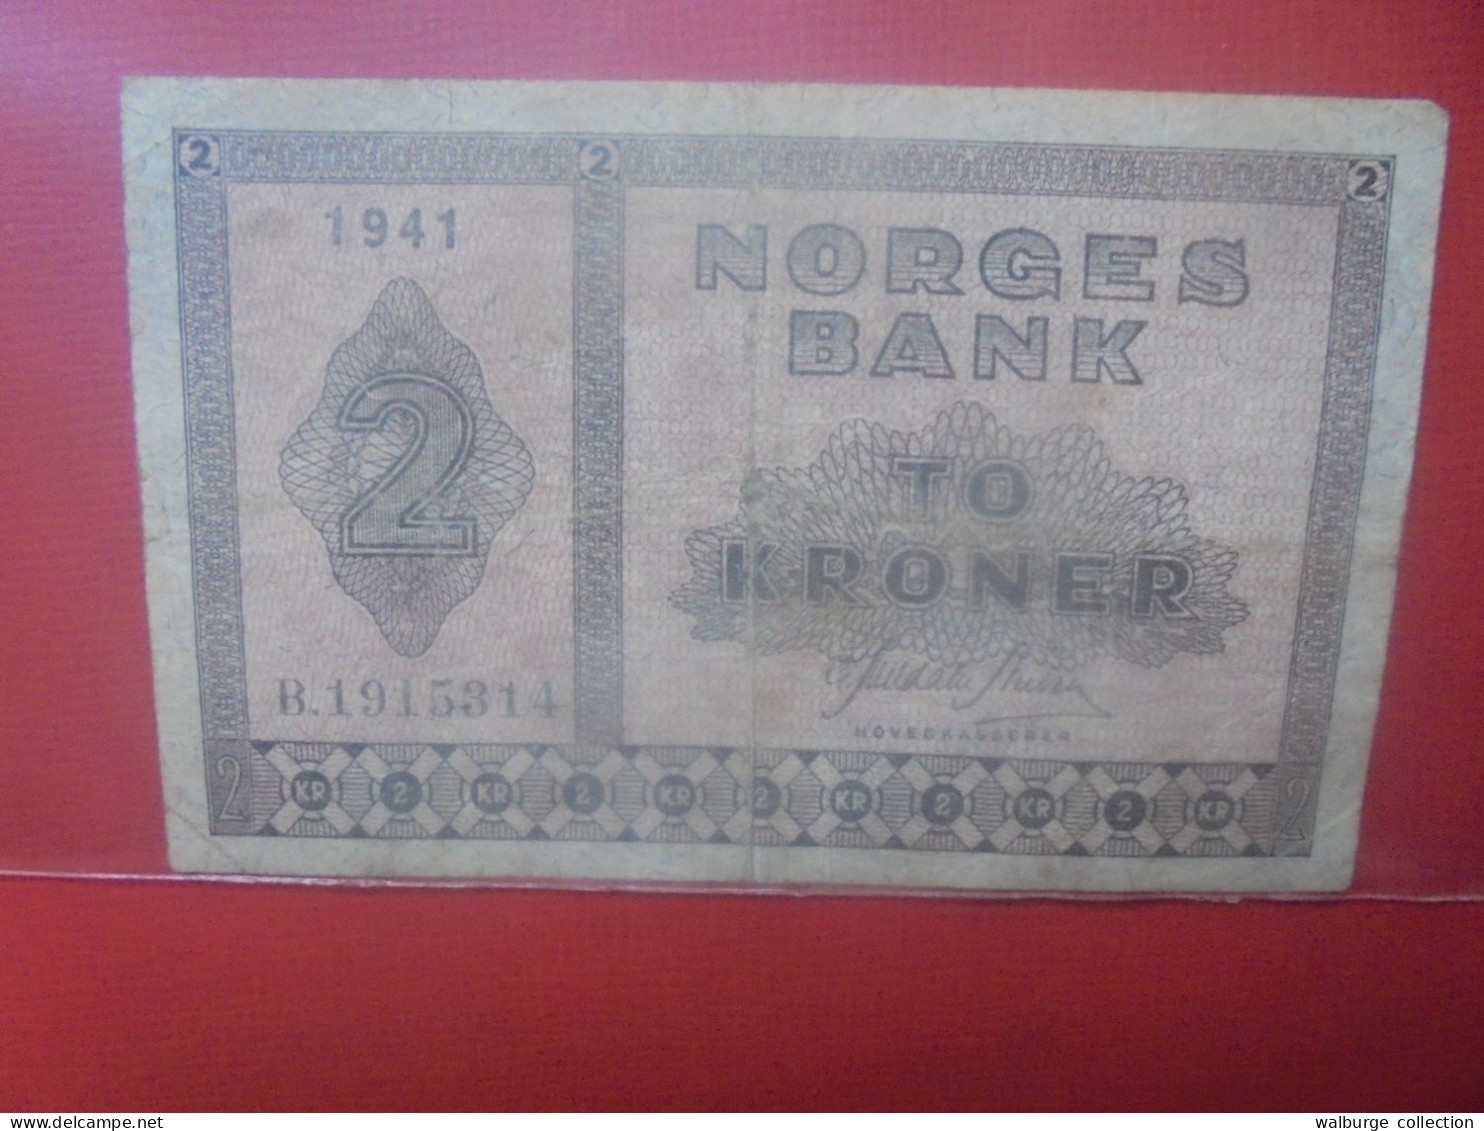 NORVEGE 2 KRONER 1941 Circuler (B.29) - Norway